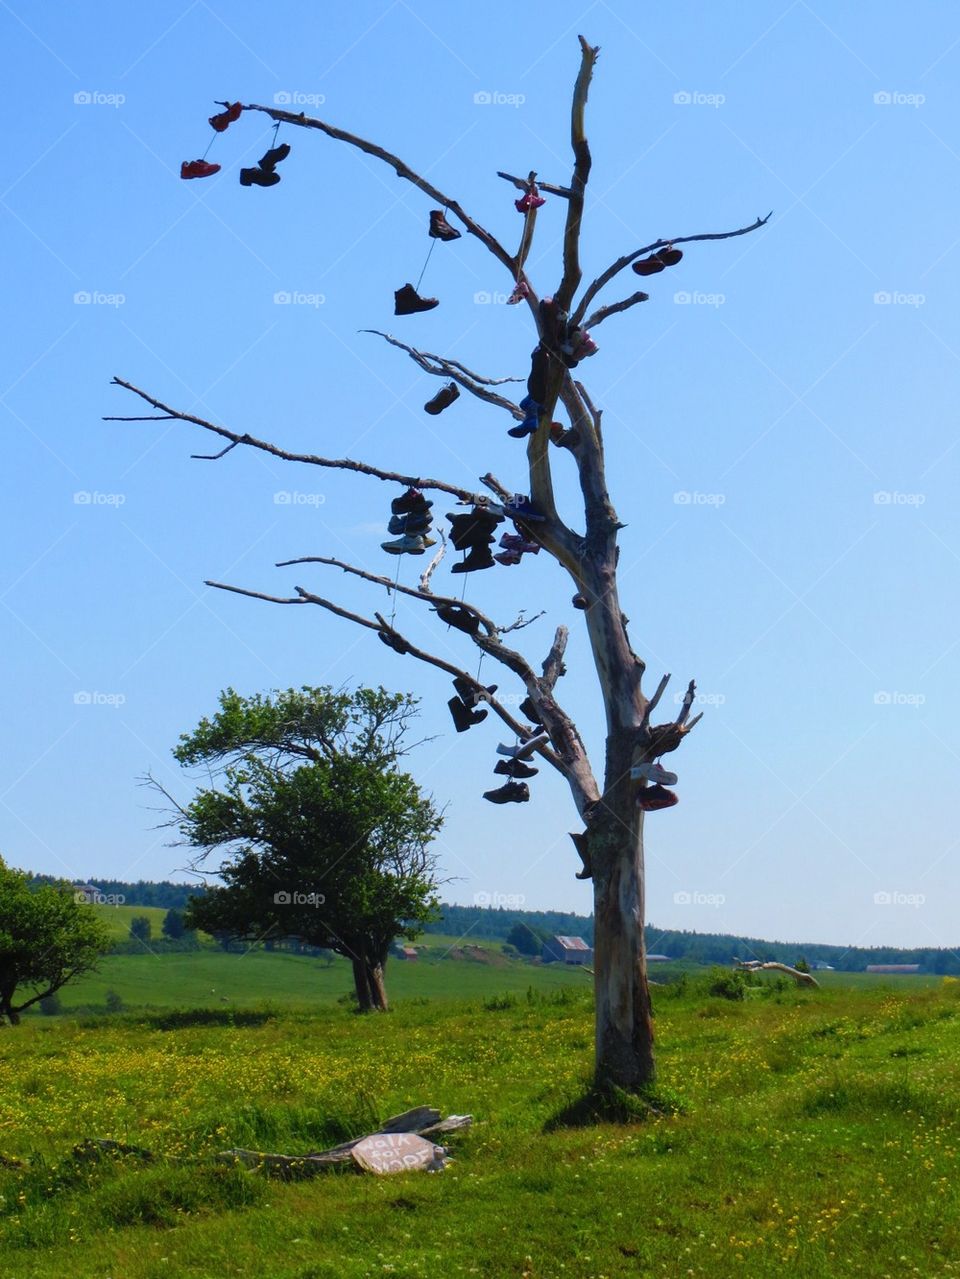 Shoe Tree